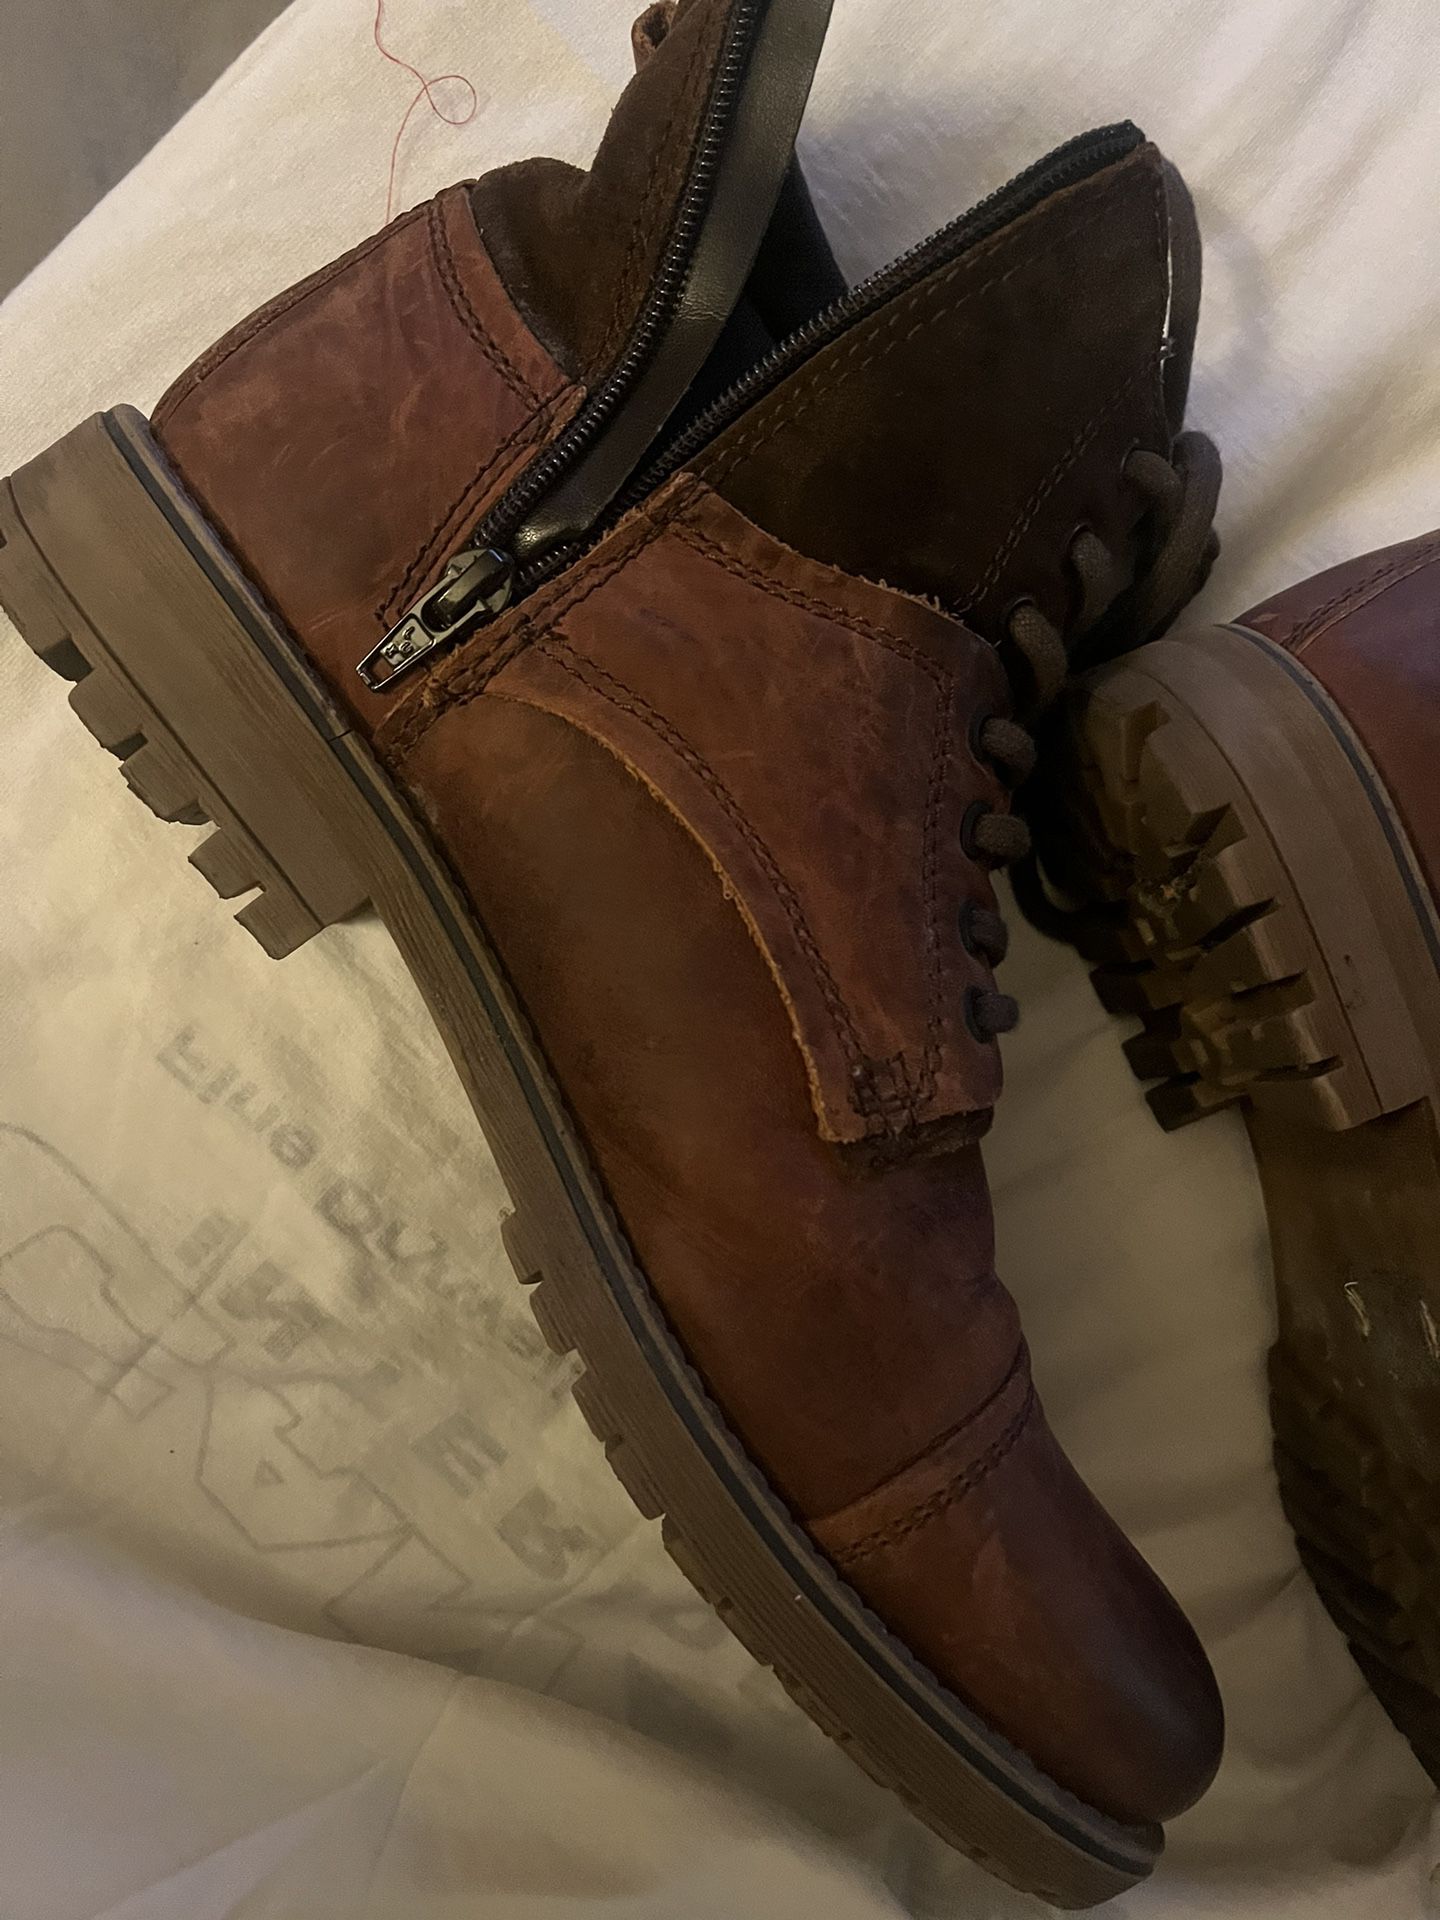 Aldo casual men boots size 9